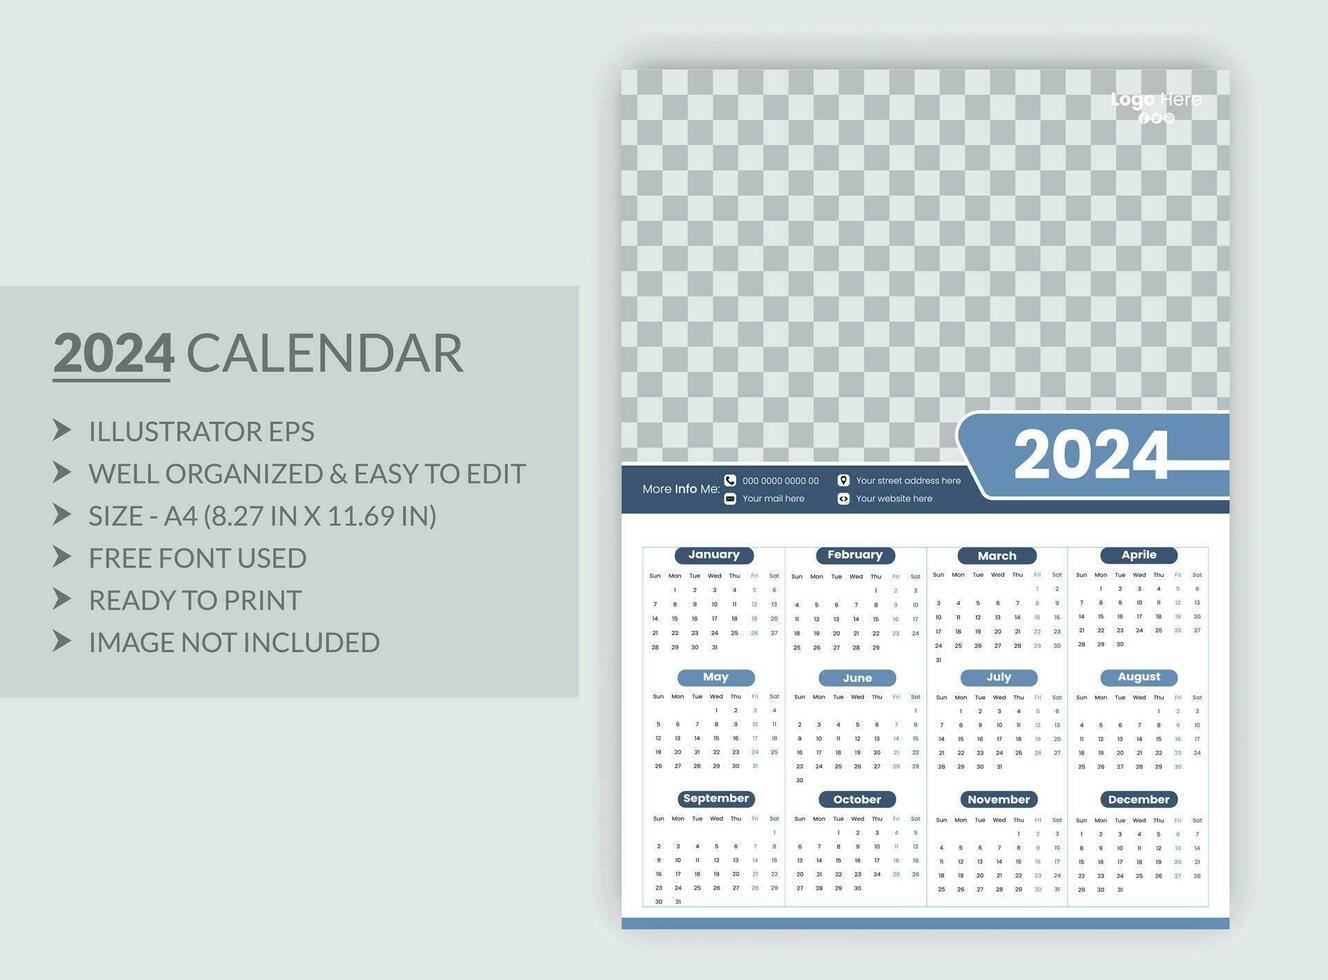 modern stil ny år 2024 kalender mall vektor